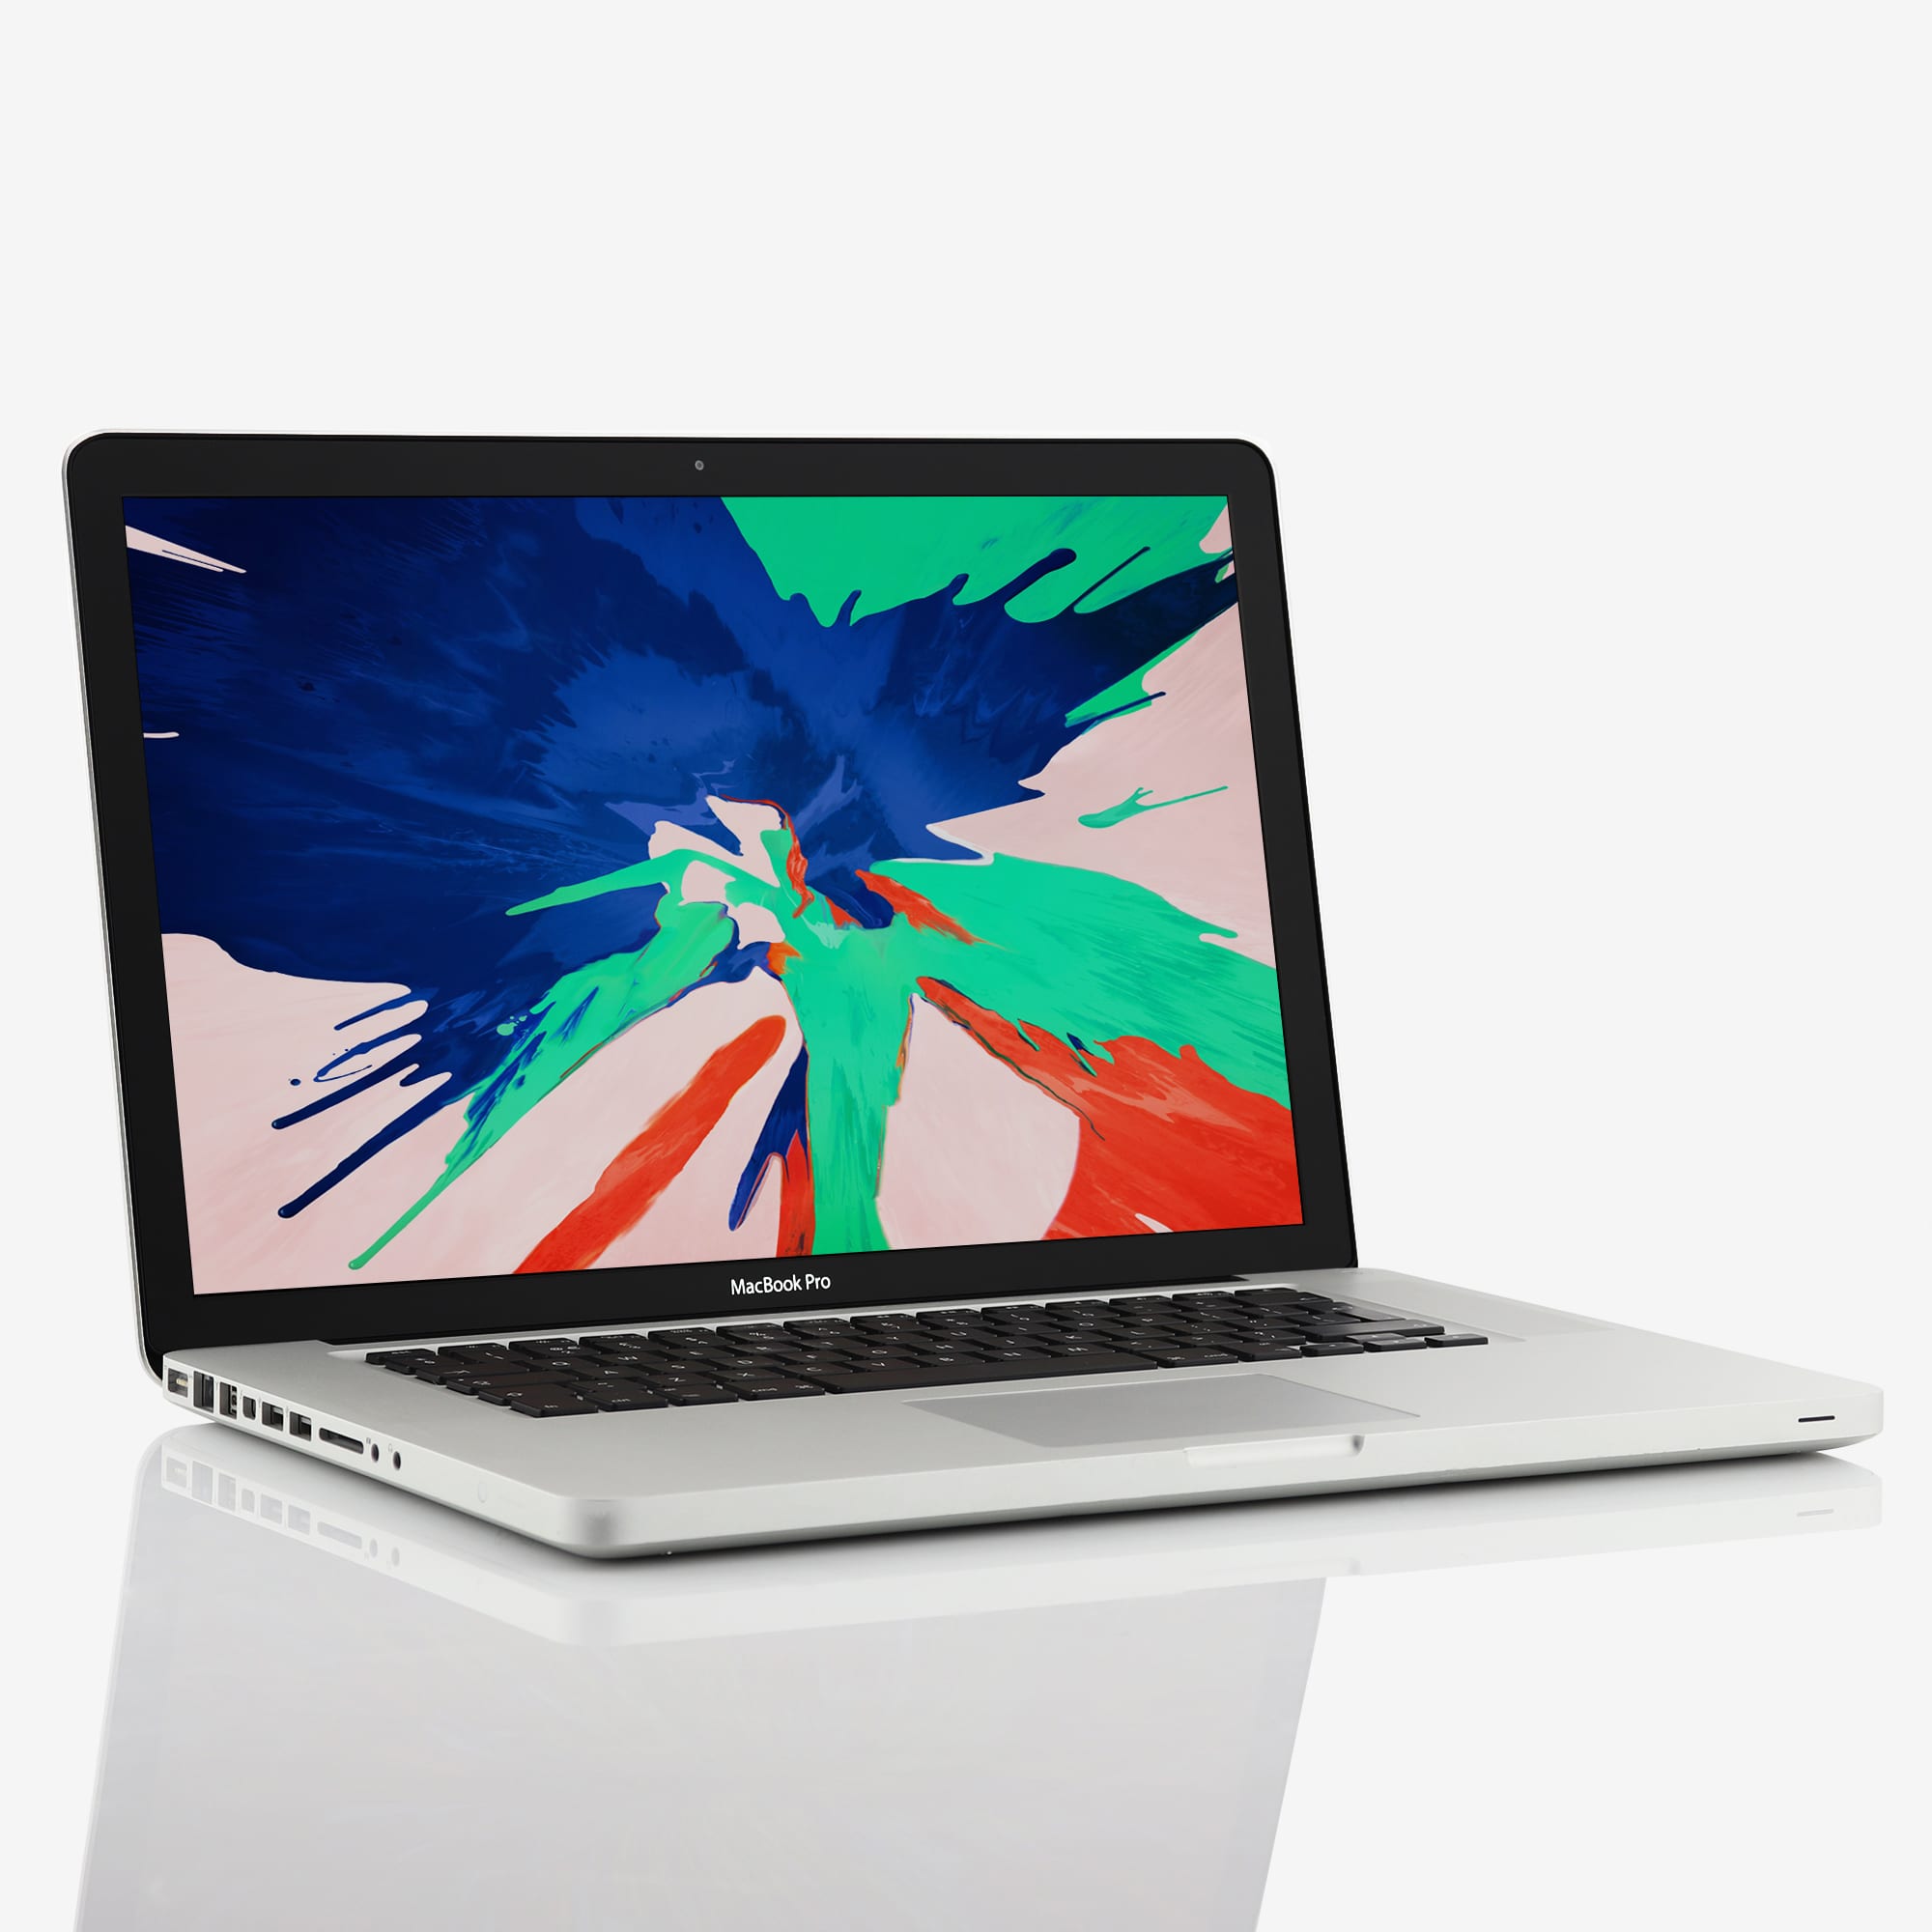 1 x Apple MacBook Pro 15 Inch Intel Core i7 2.60 GHz (2012)